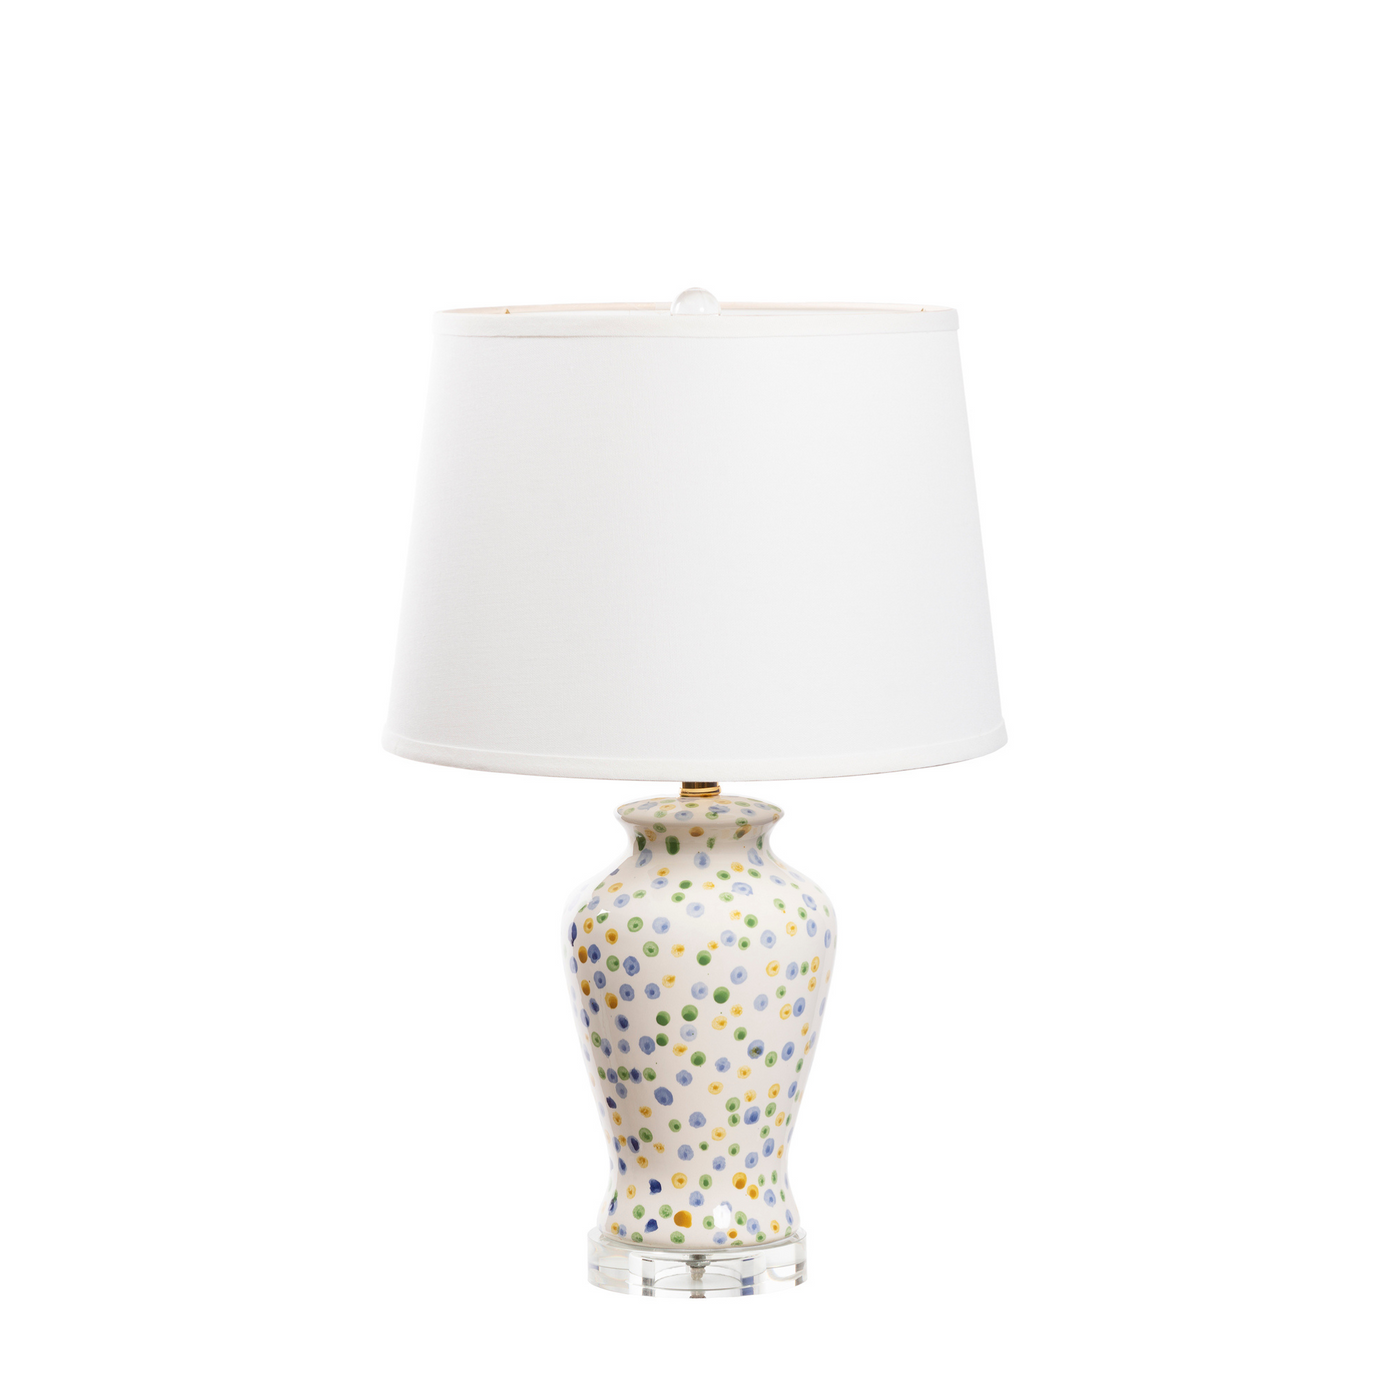 Molly Table Lamp | Newport Lamp And Shade | Located in Newport, RI